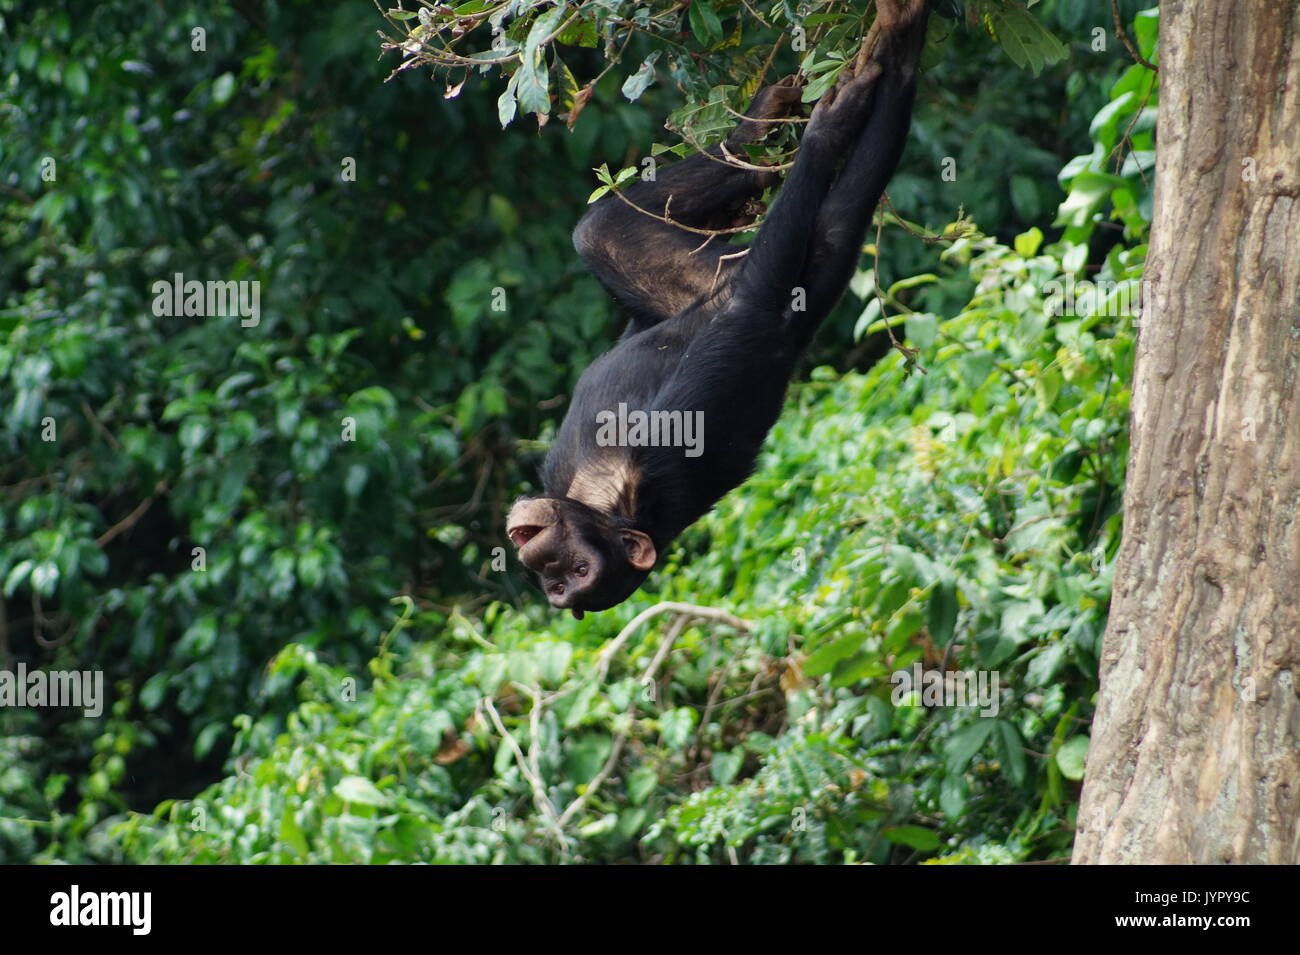 Chimpanzee swinging upside down from a tree Stock Photo